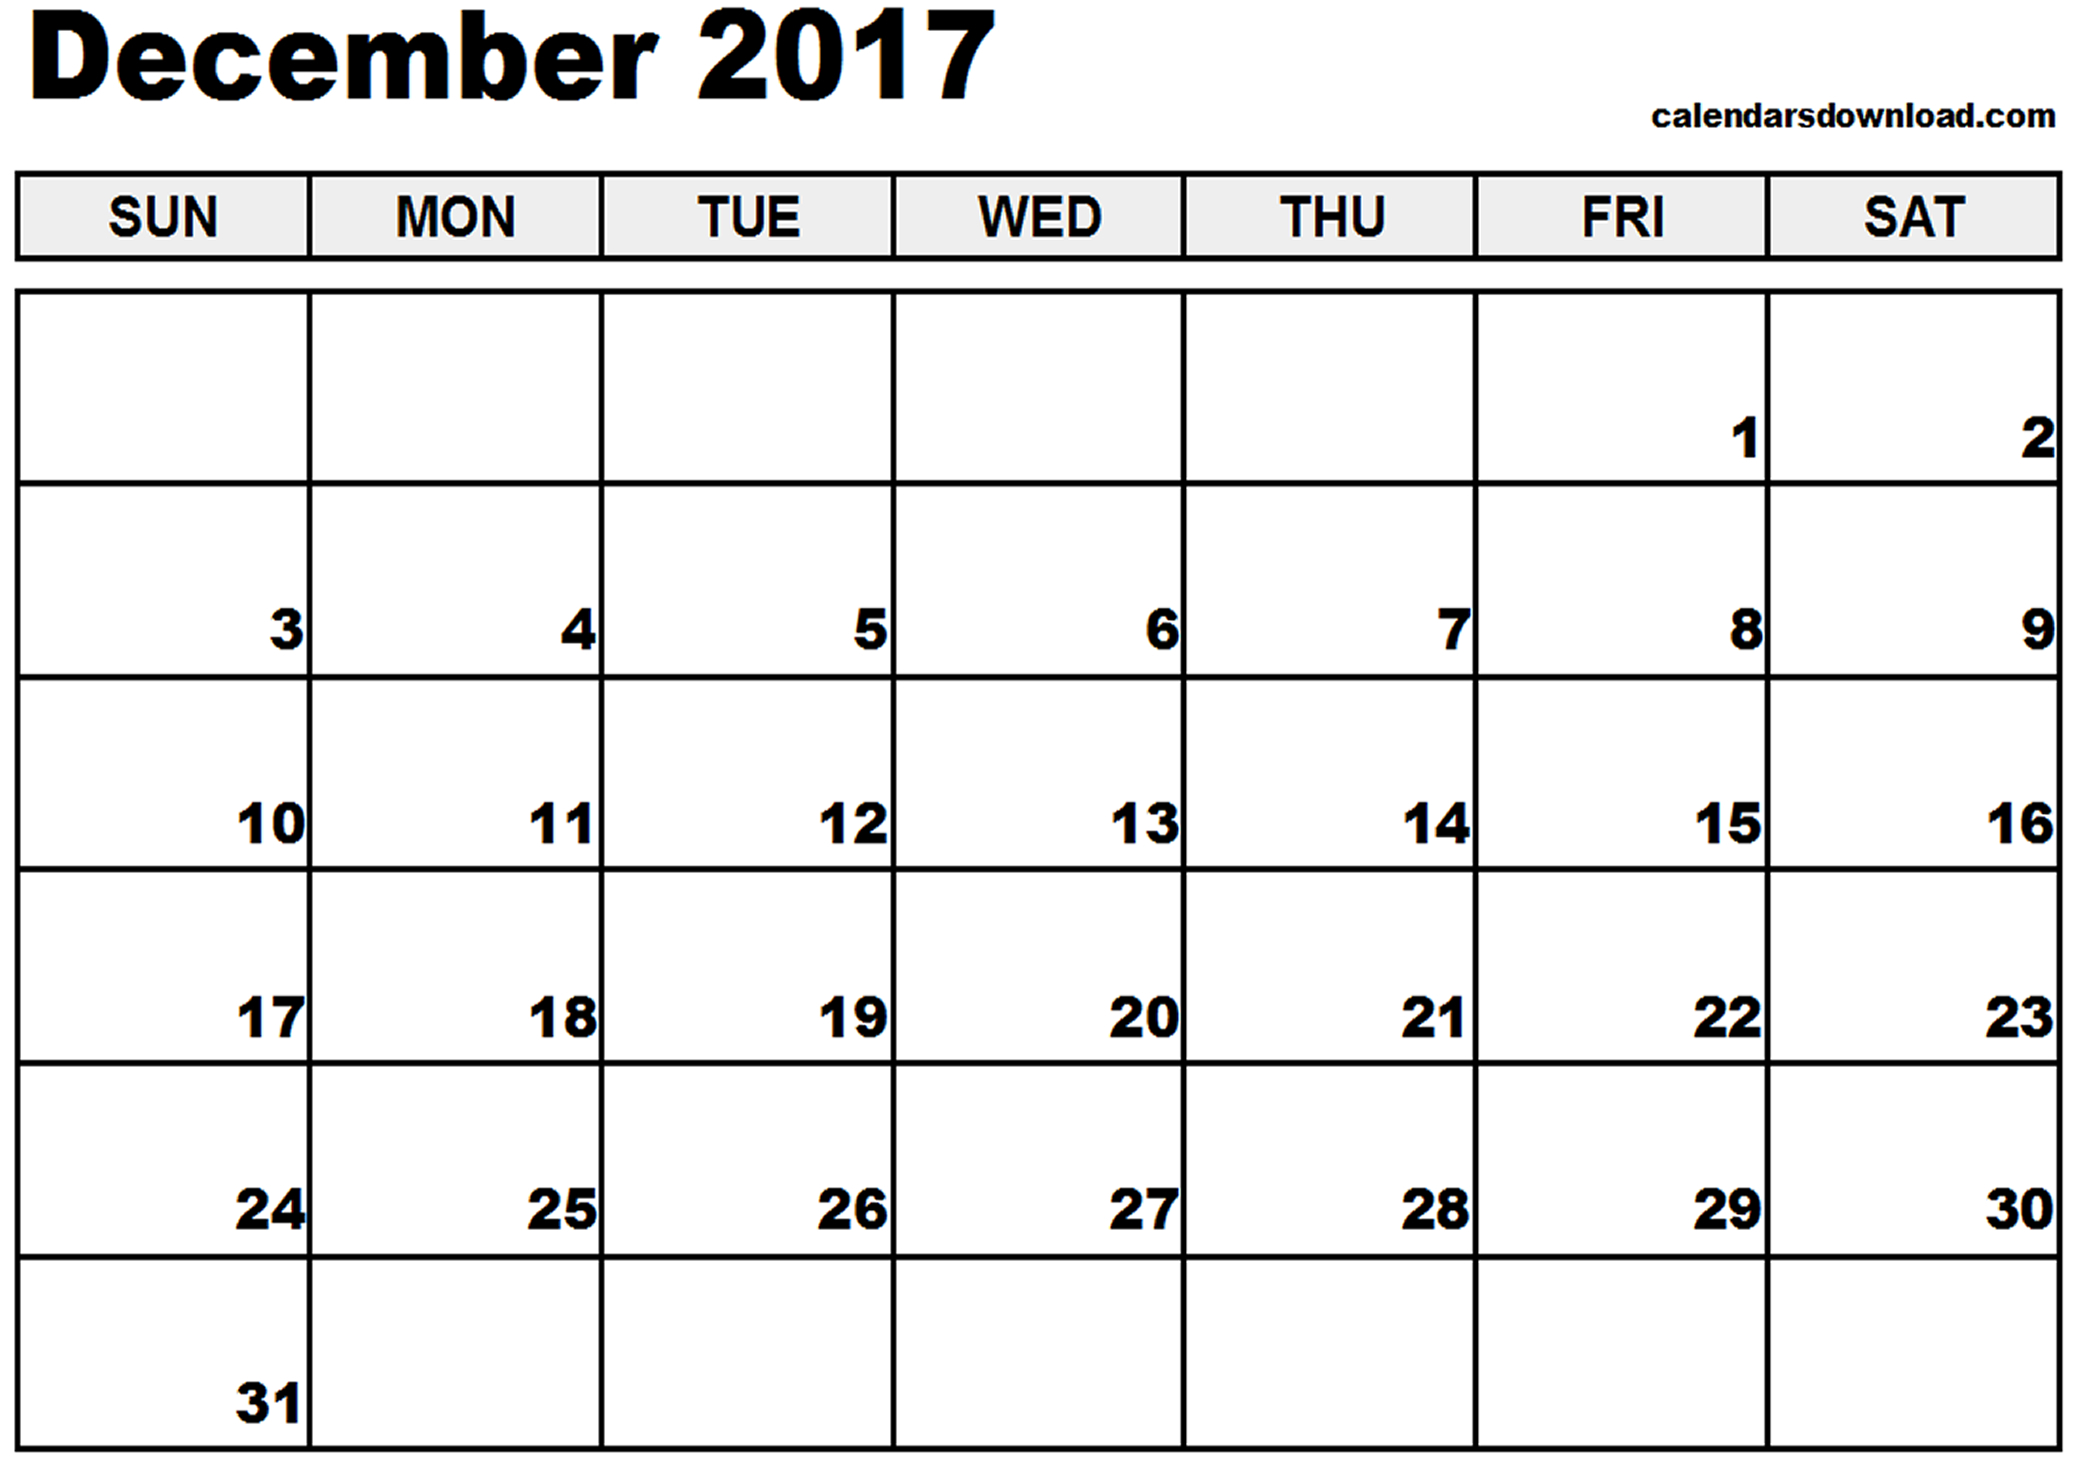 pdf-december-2017-calendar-simples-assim